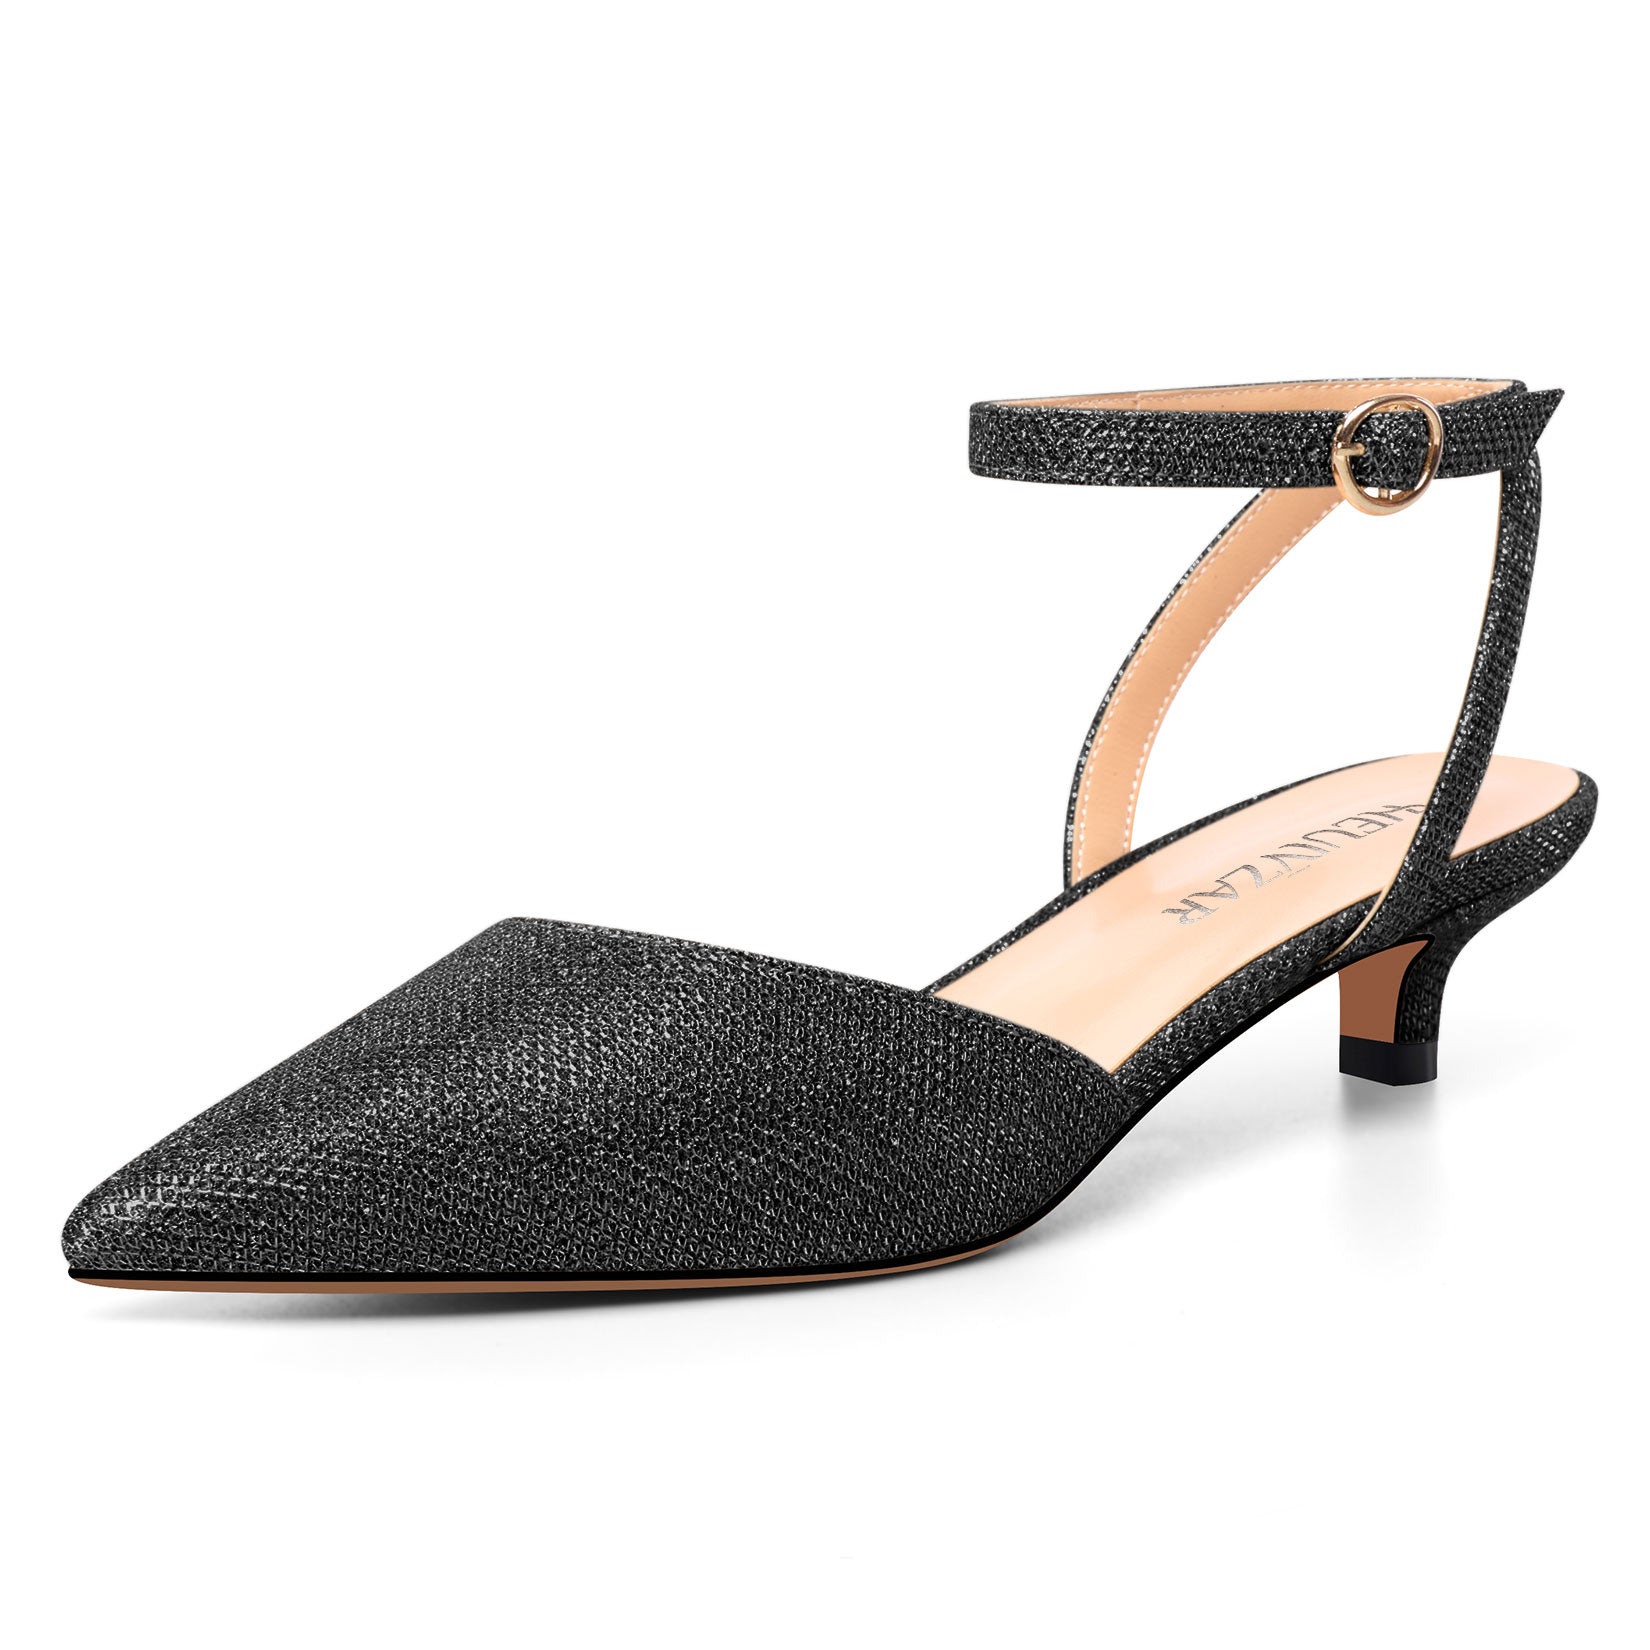 Bling black sparkle crystal low high heels club party ball pump platform  shoes. | eBay